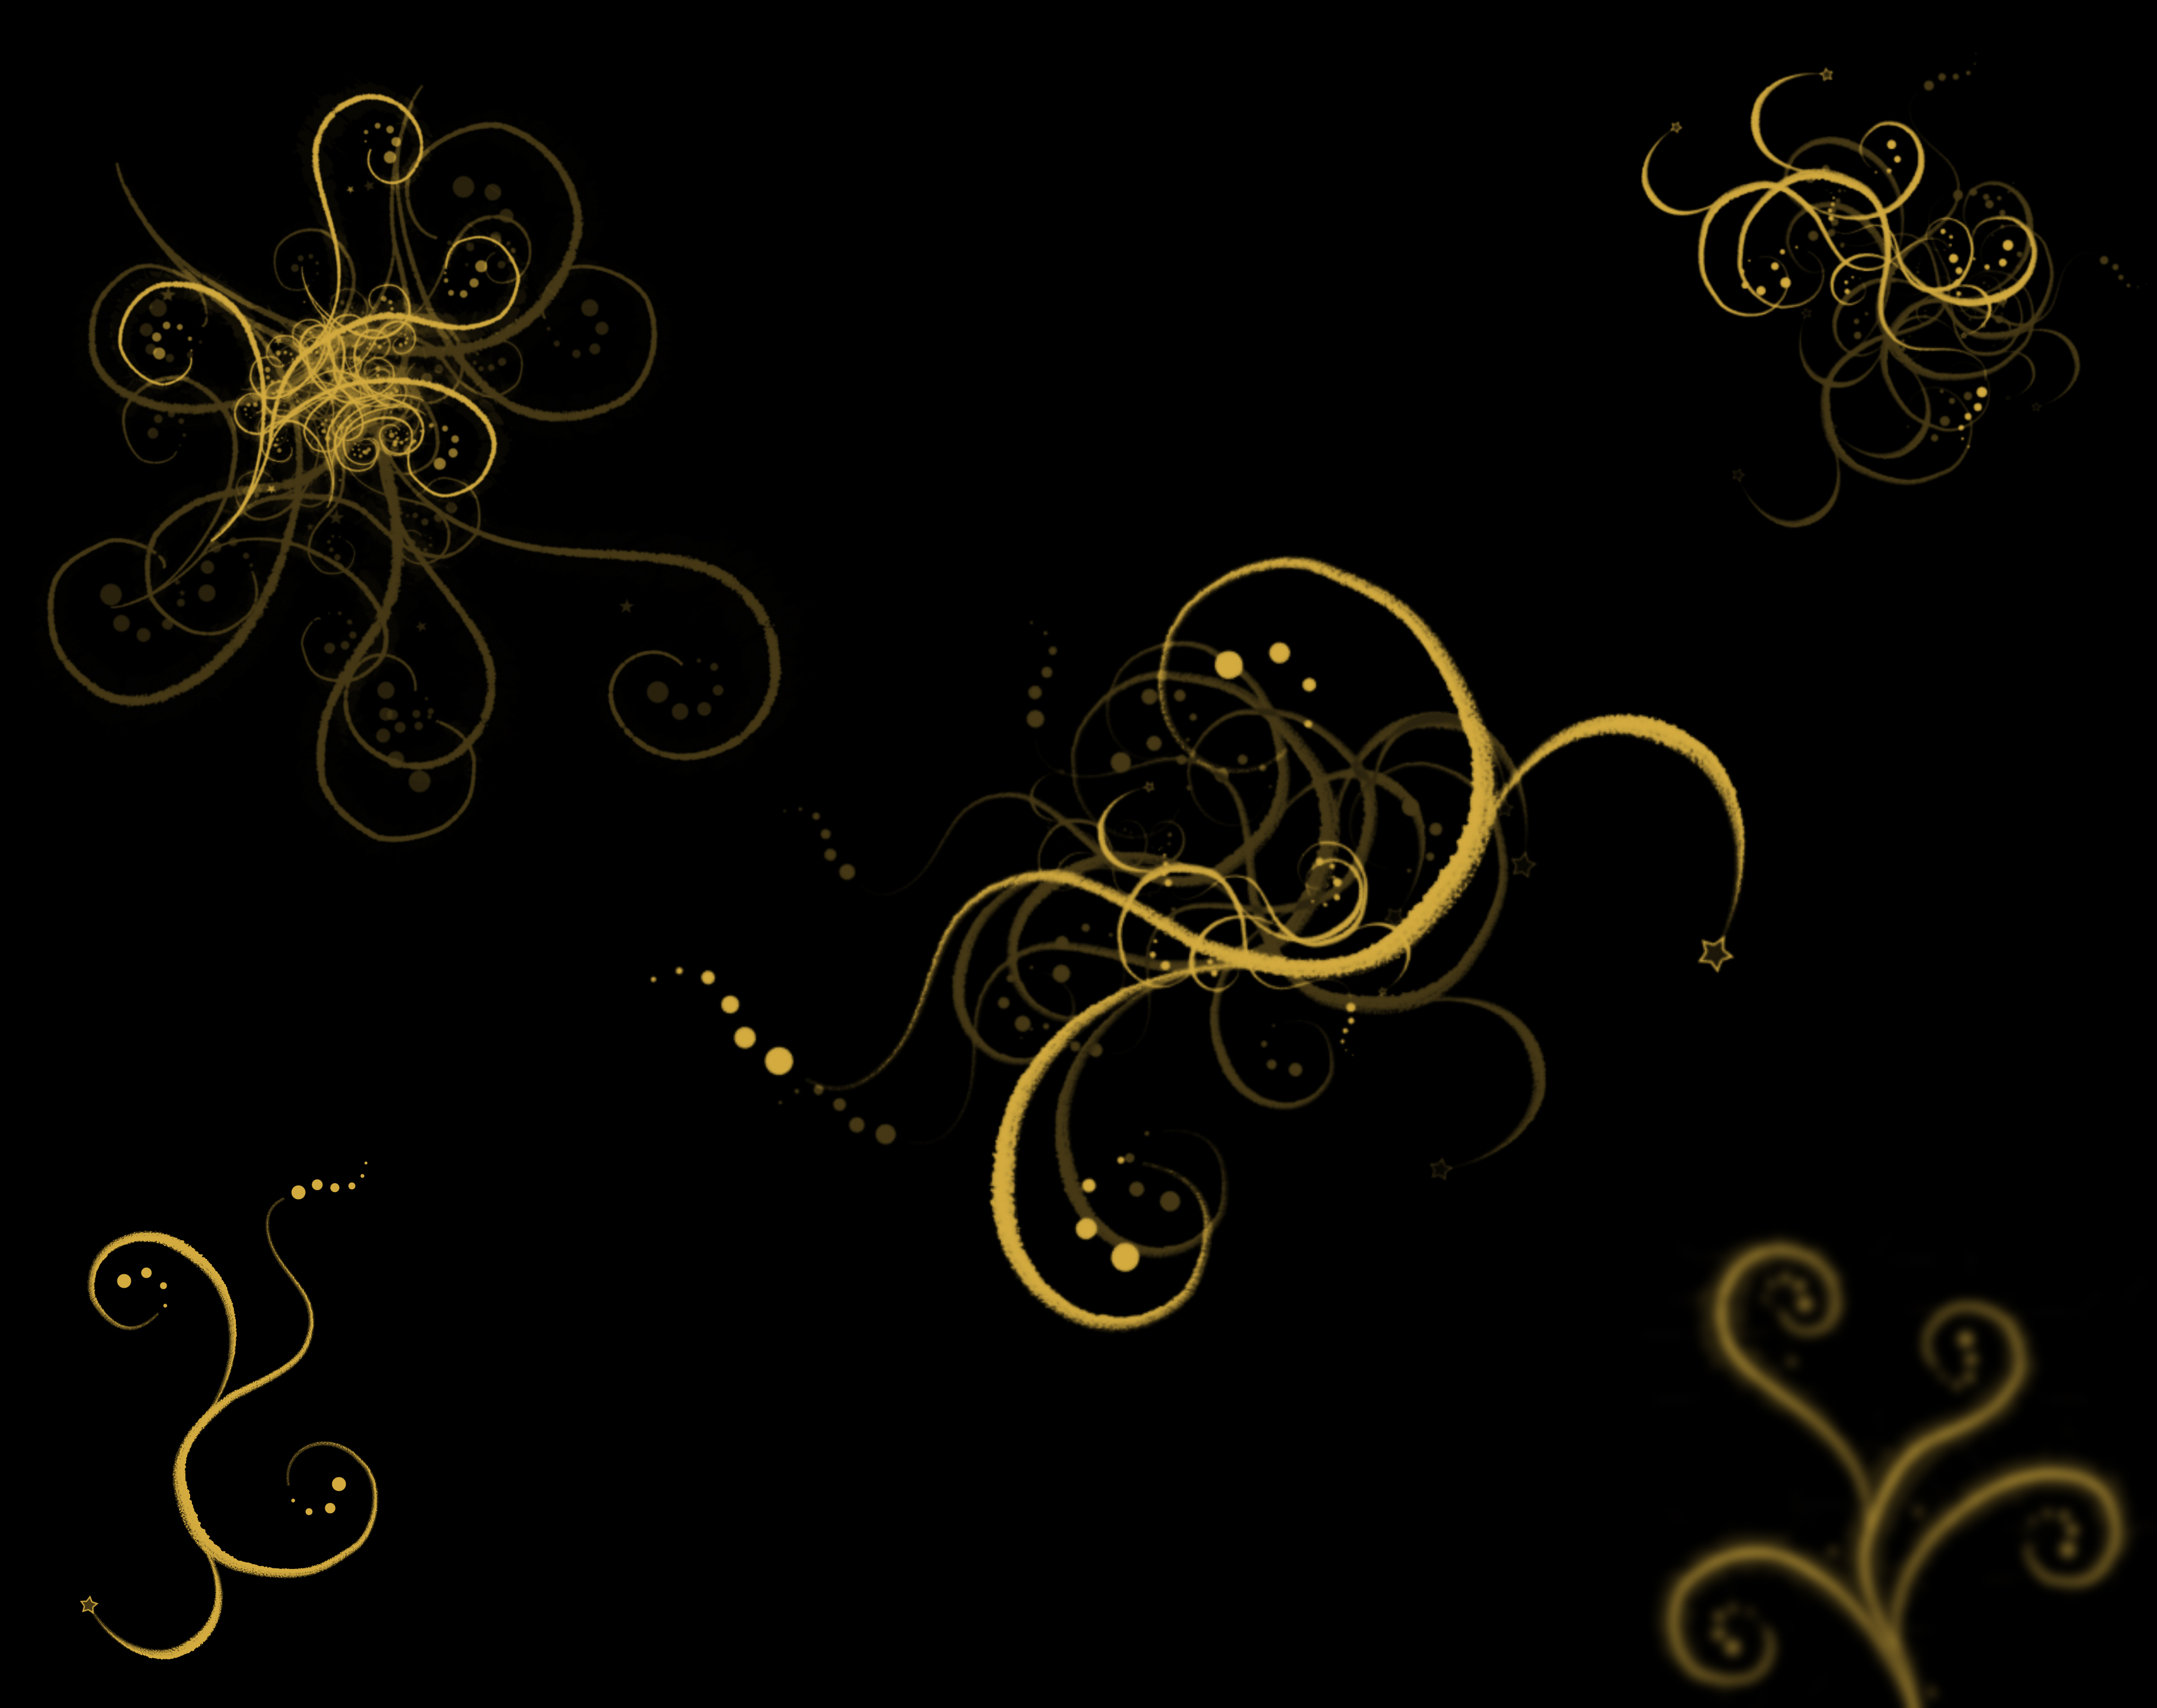 Black__n__Gold_wallpaper_by_poker15.jpg (3675×2910)